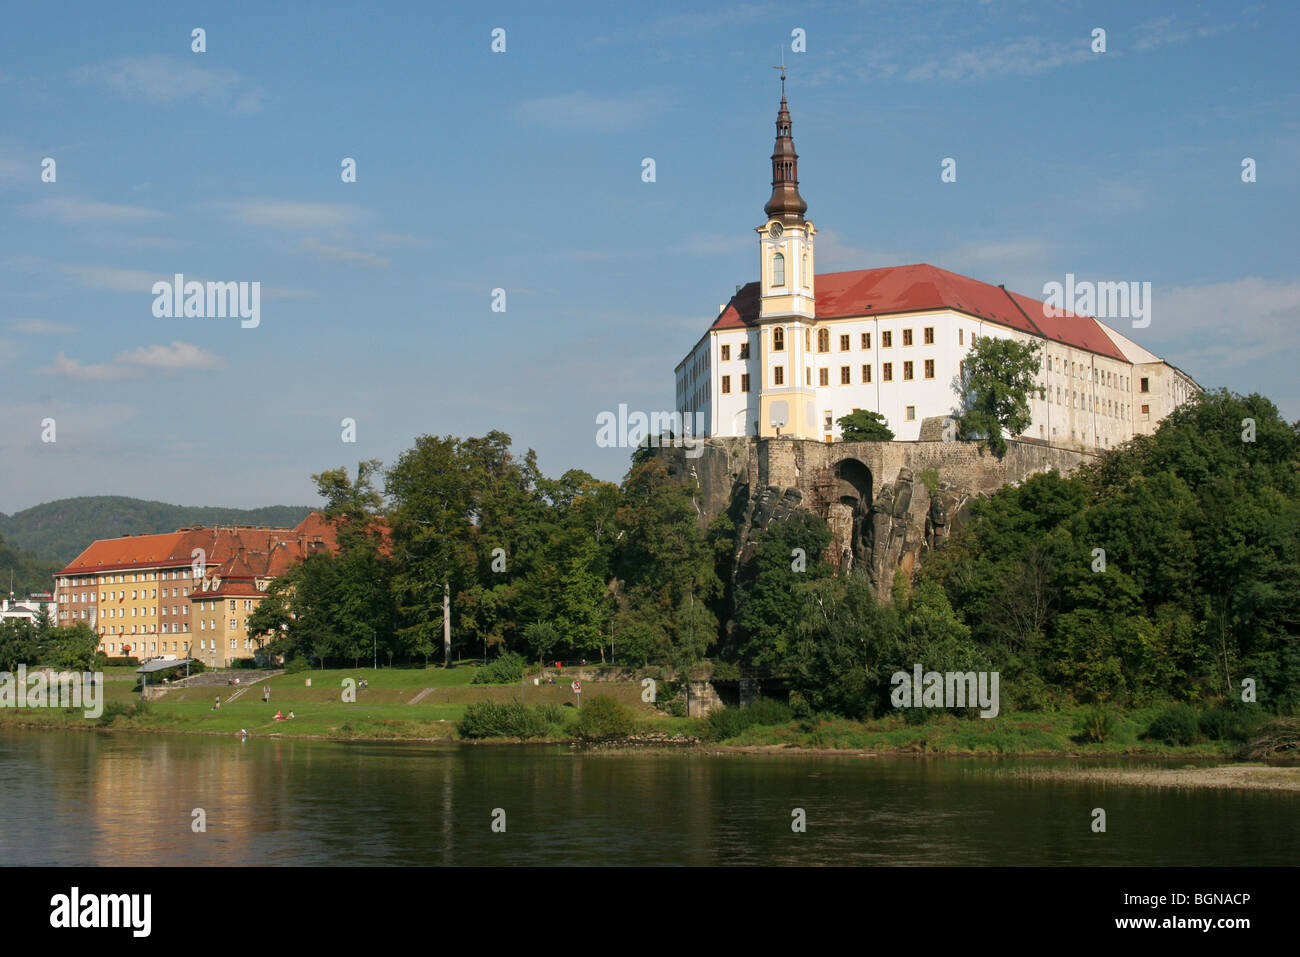 The castle Decin along the river Elbe, Czech Republic Stock Photo